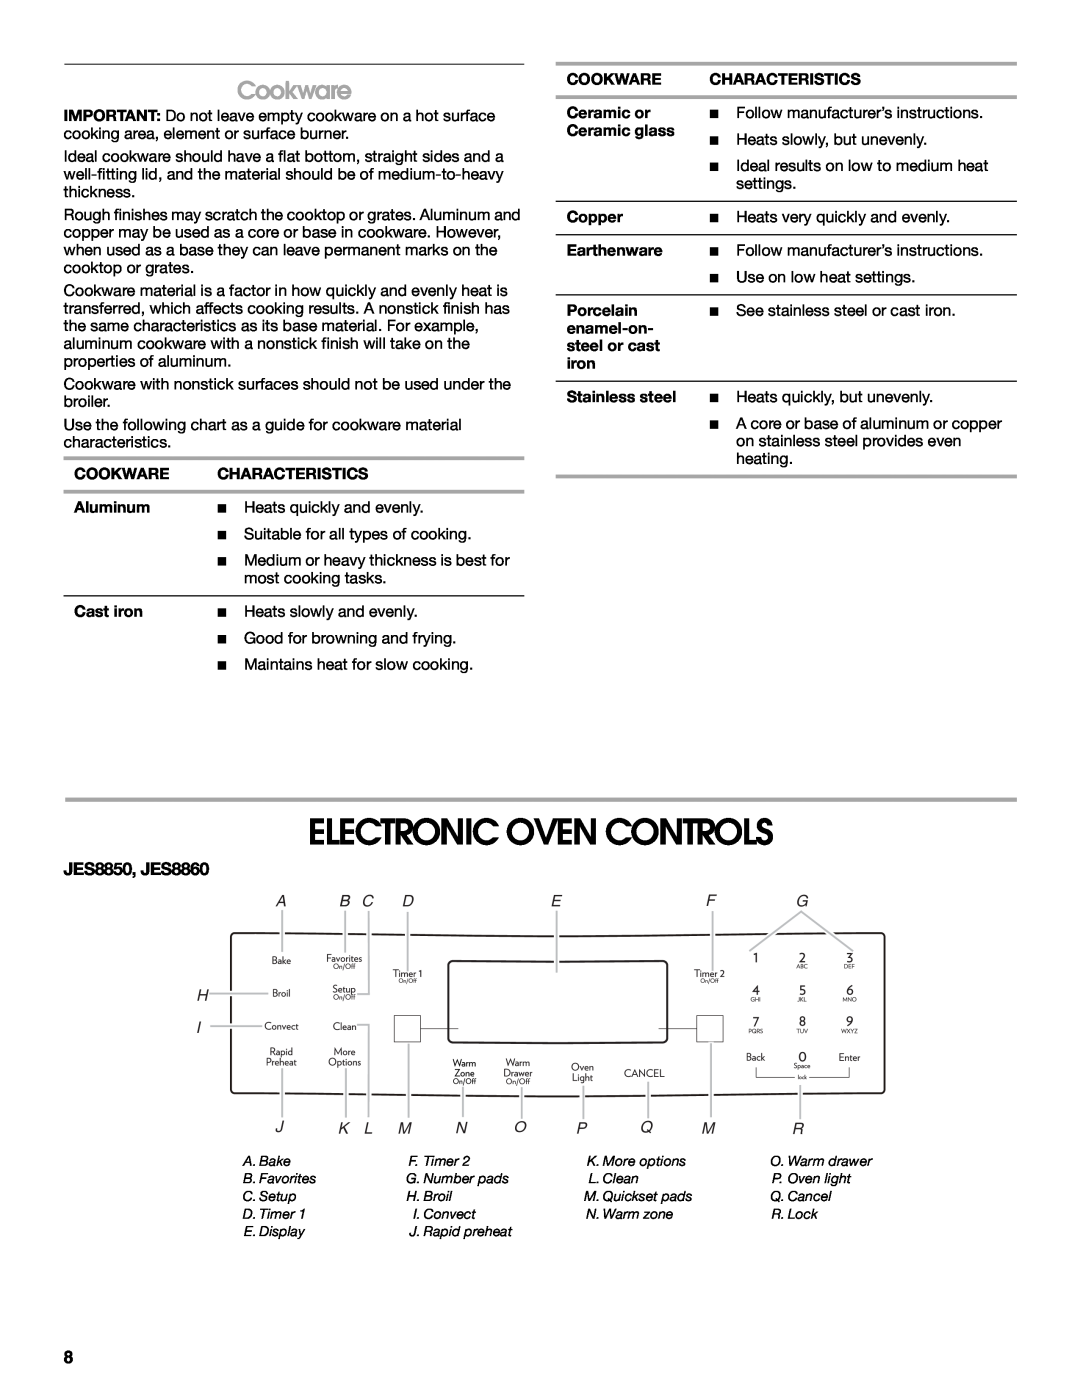 Jenn-Air Electronic Oven Controls, Cookware, JES8850, JES8860, Characteristics, Aluminum, Cast iron, Ceramic or, Copper 